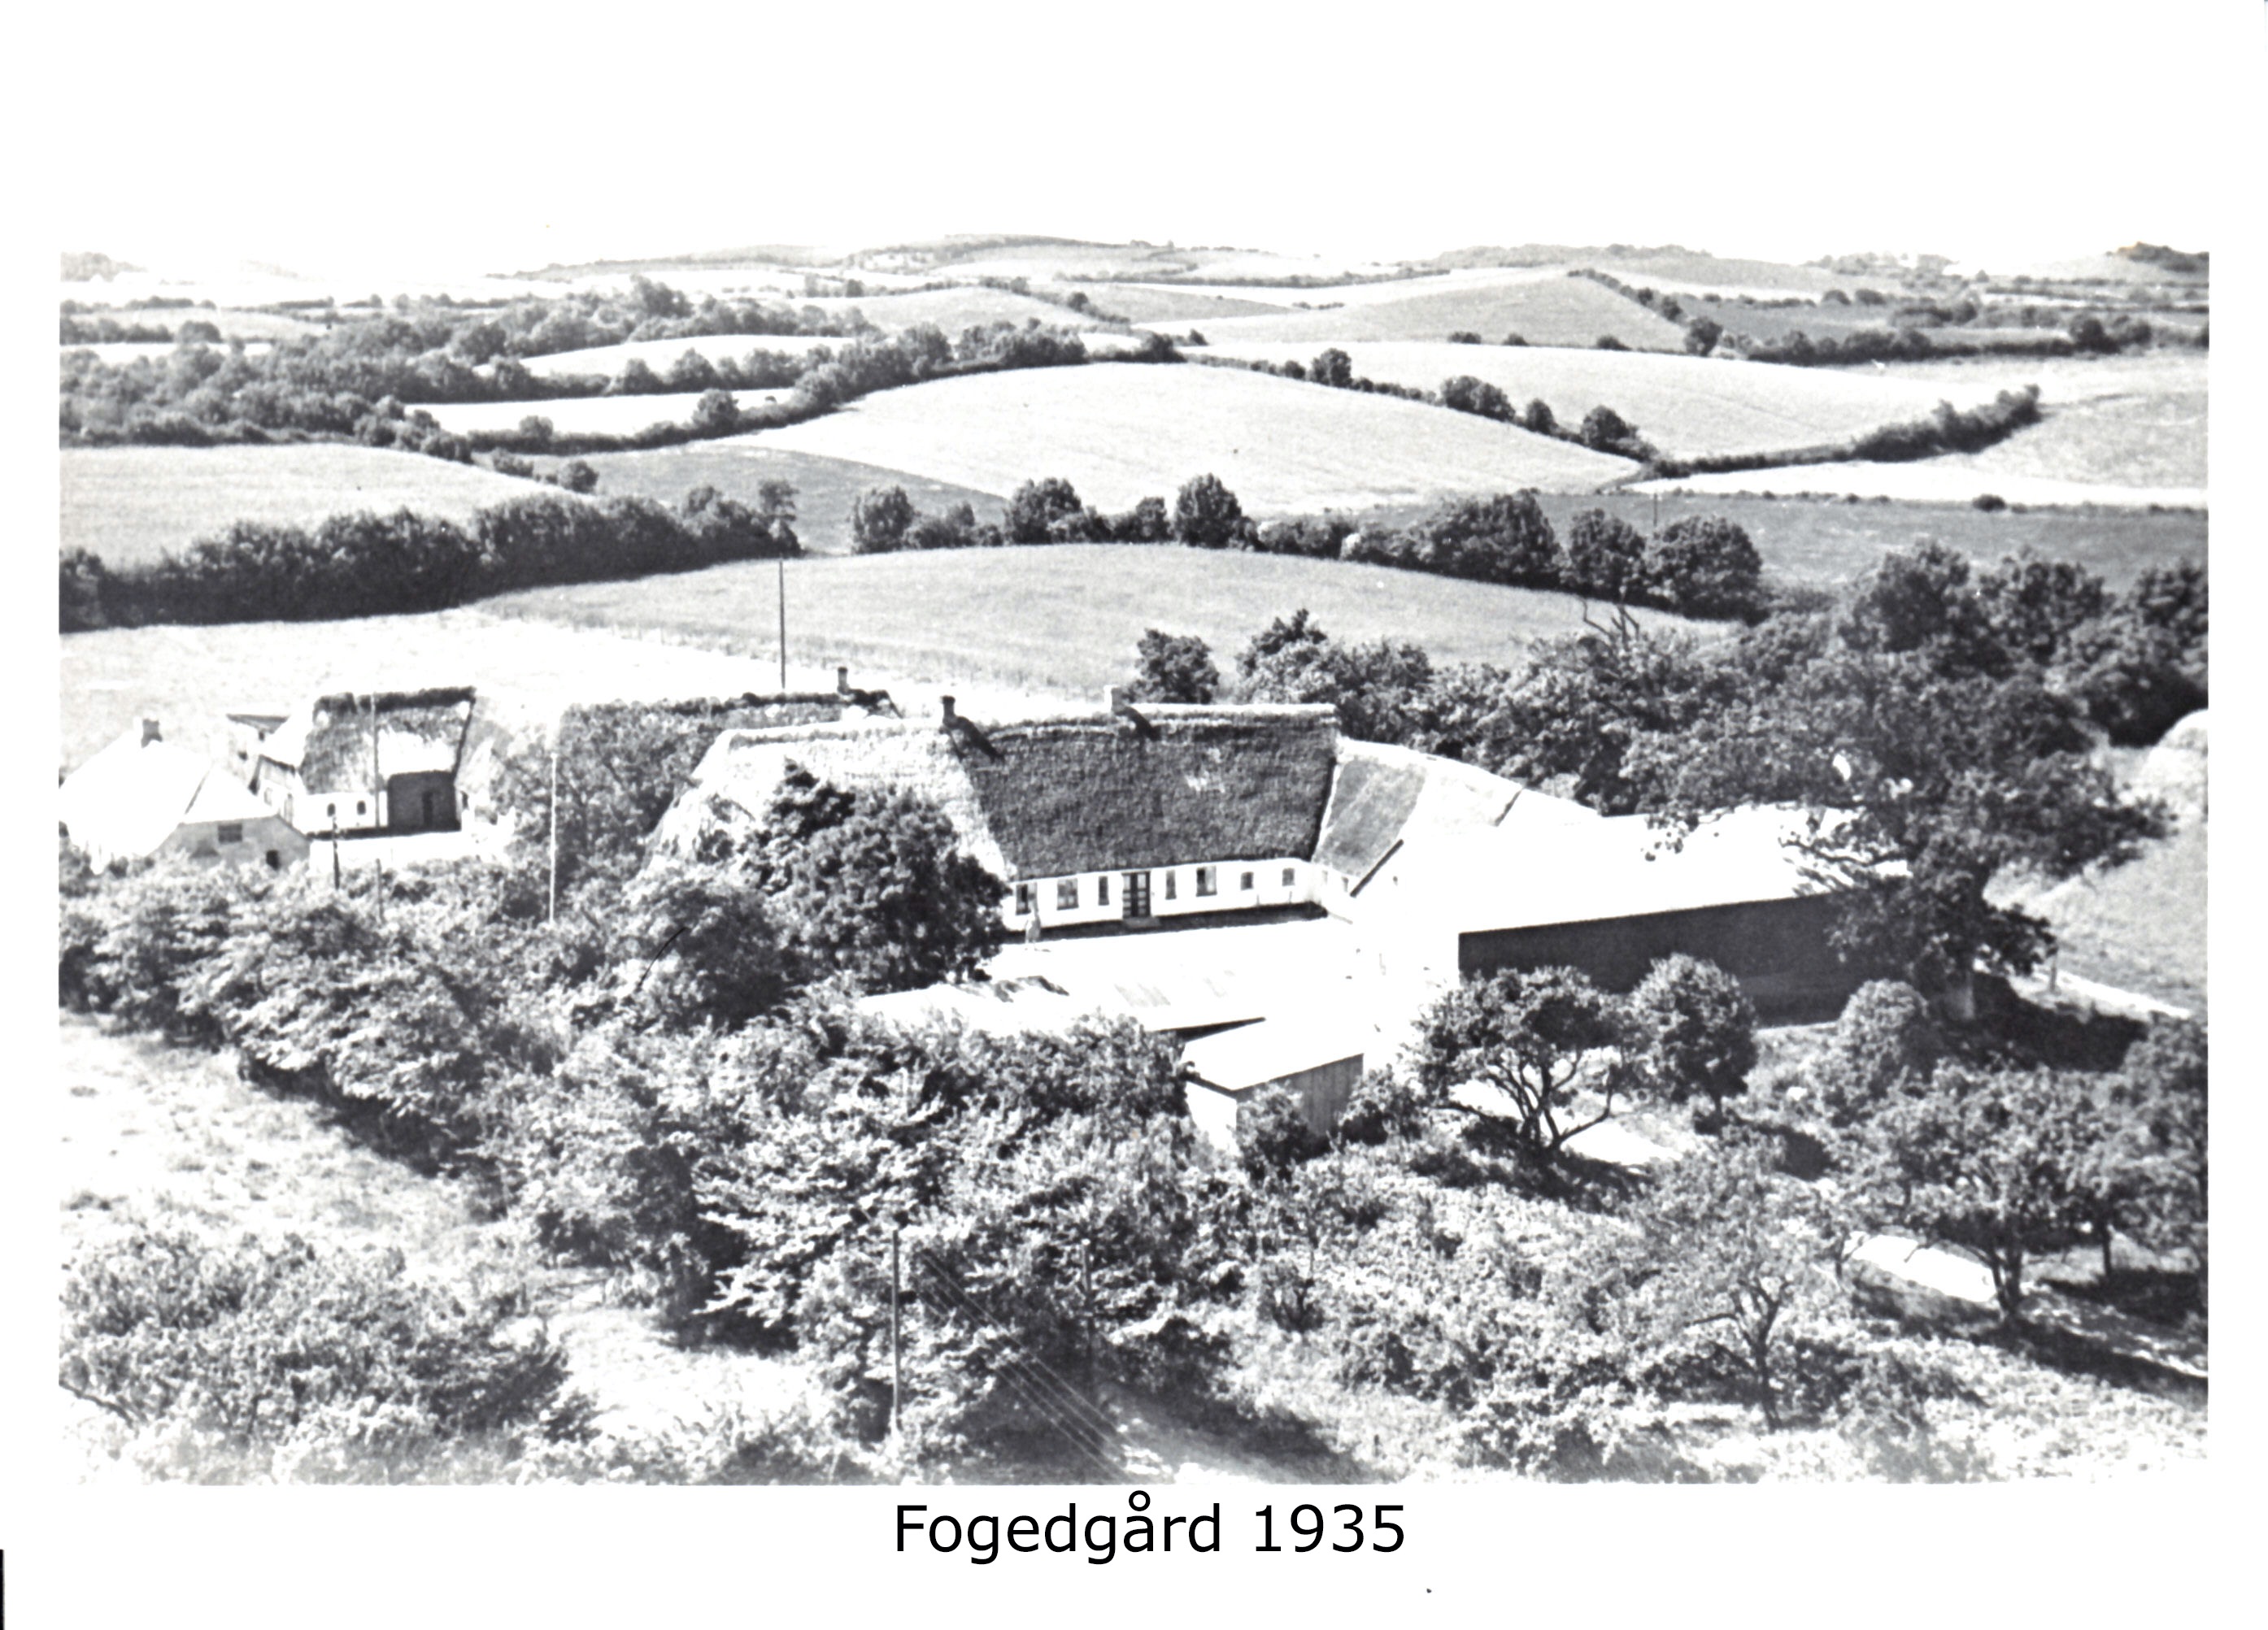 Fogedgaard 1933